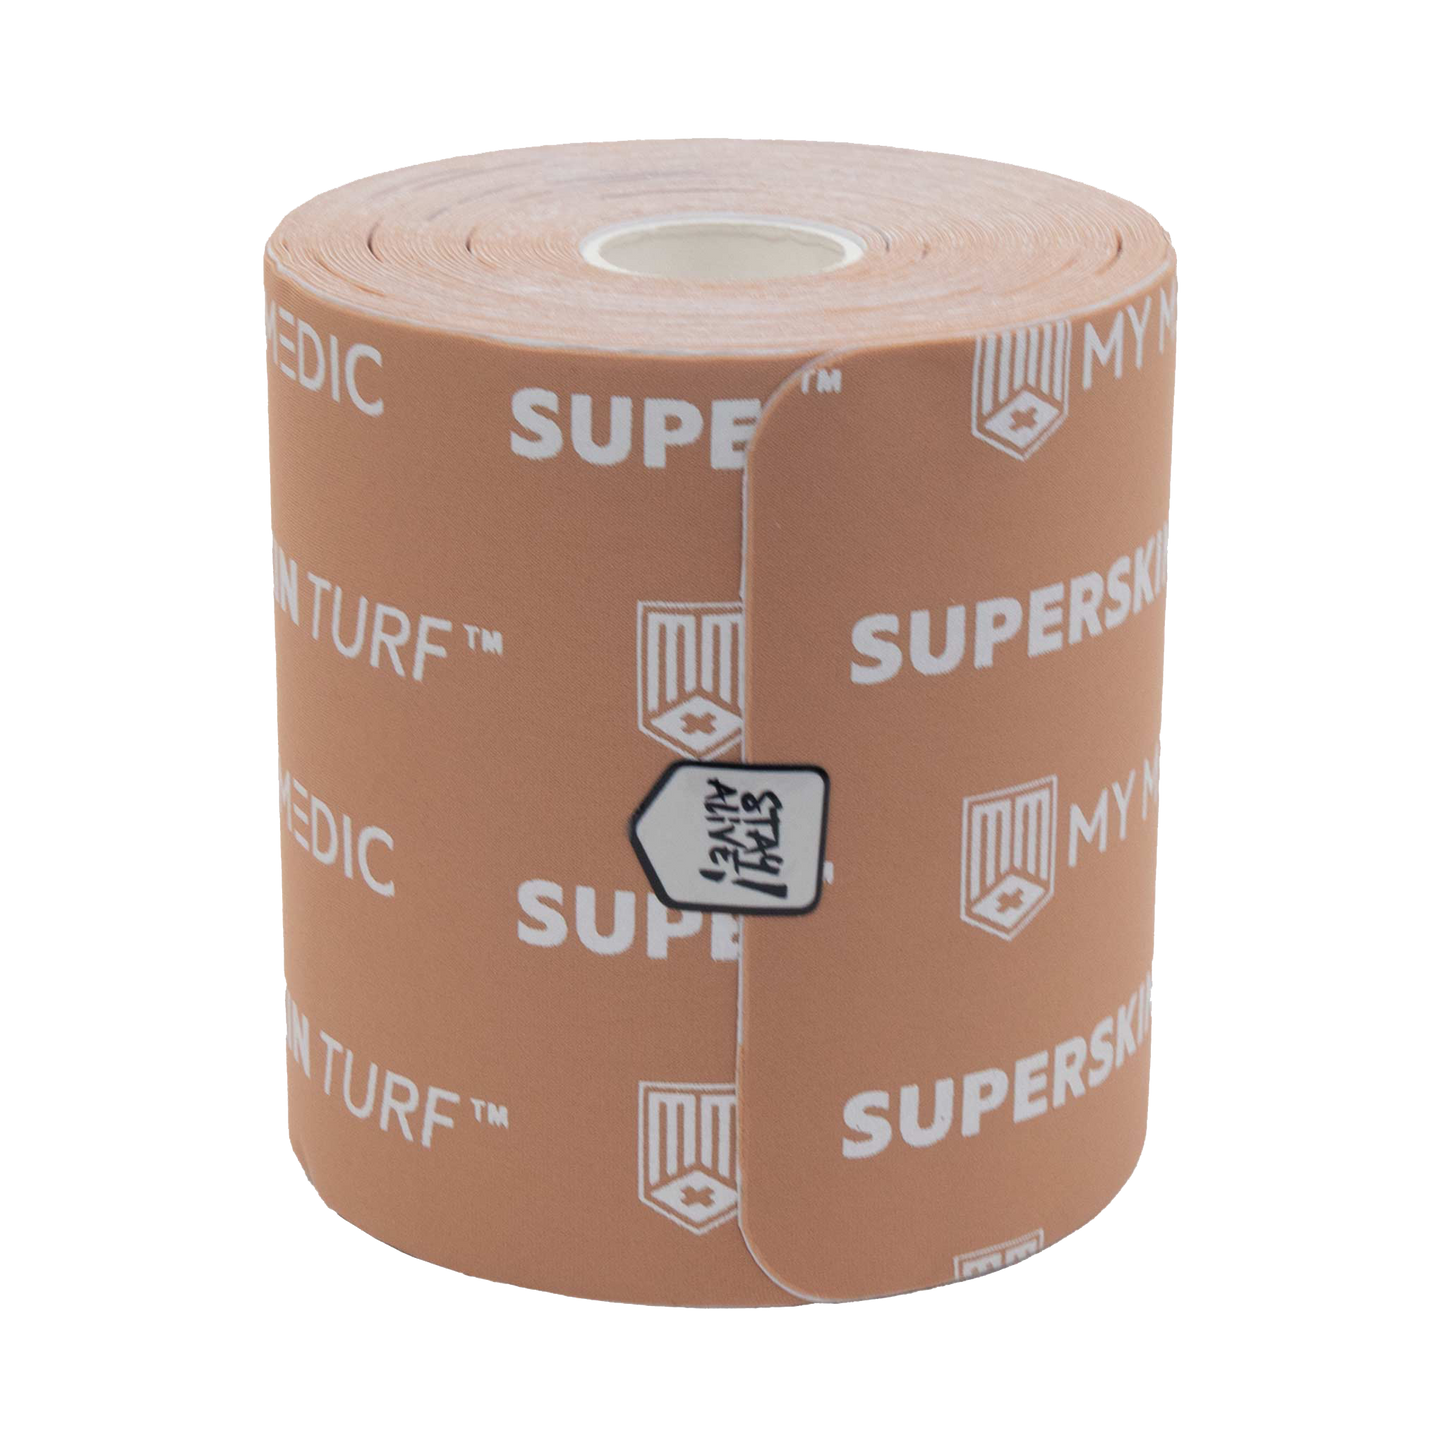 SuperSkin Turf Tape